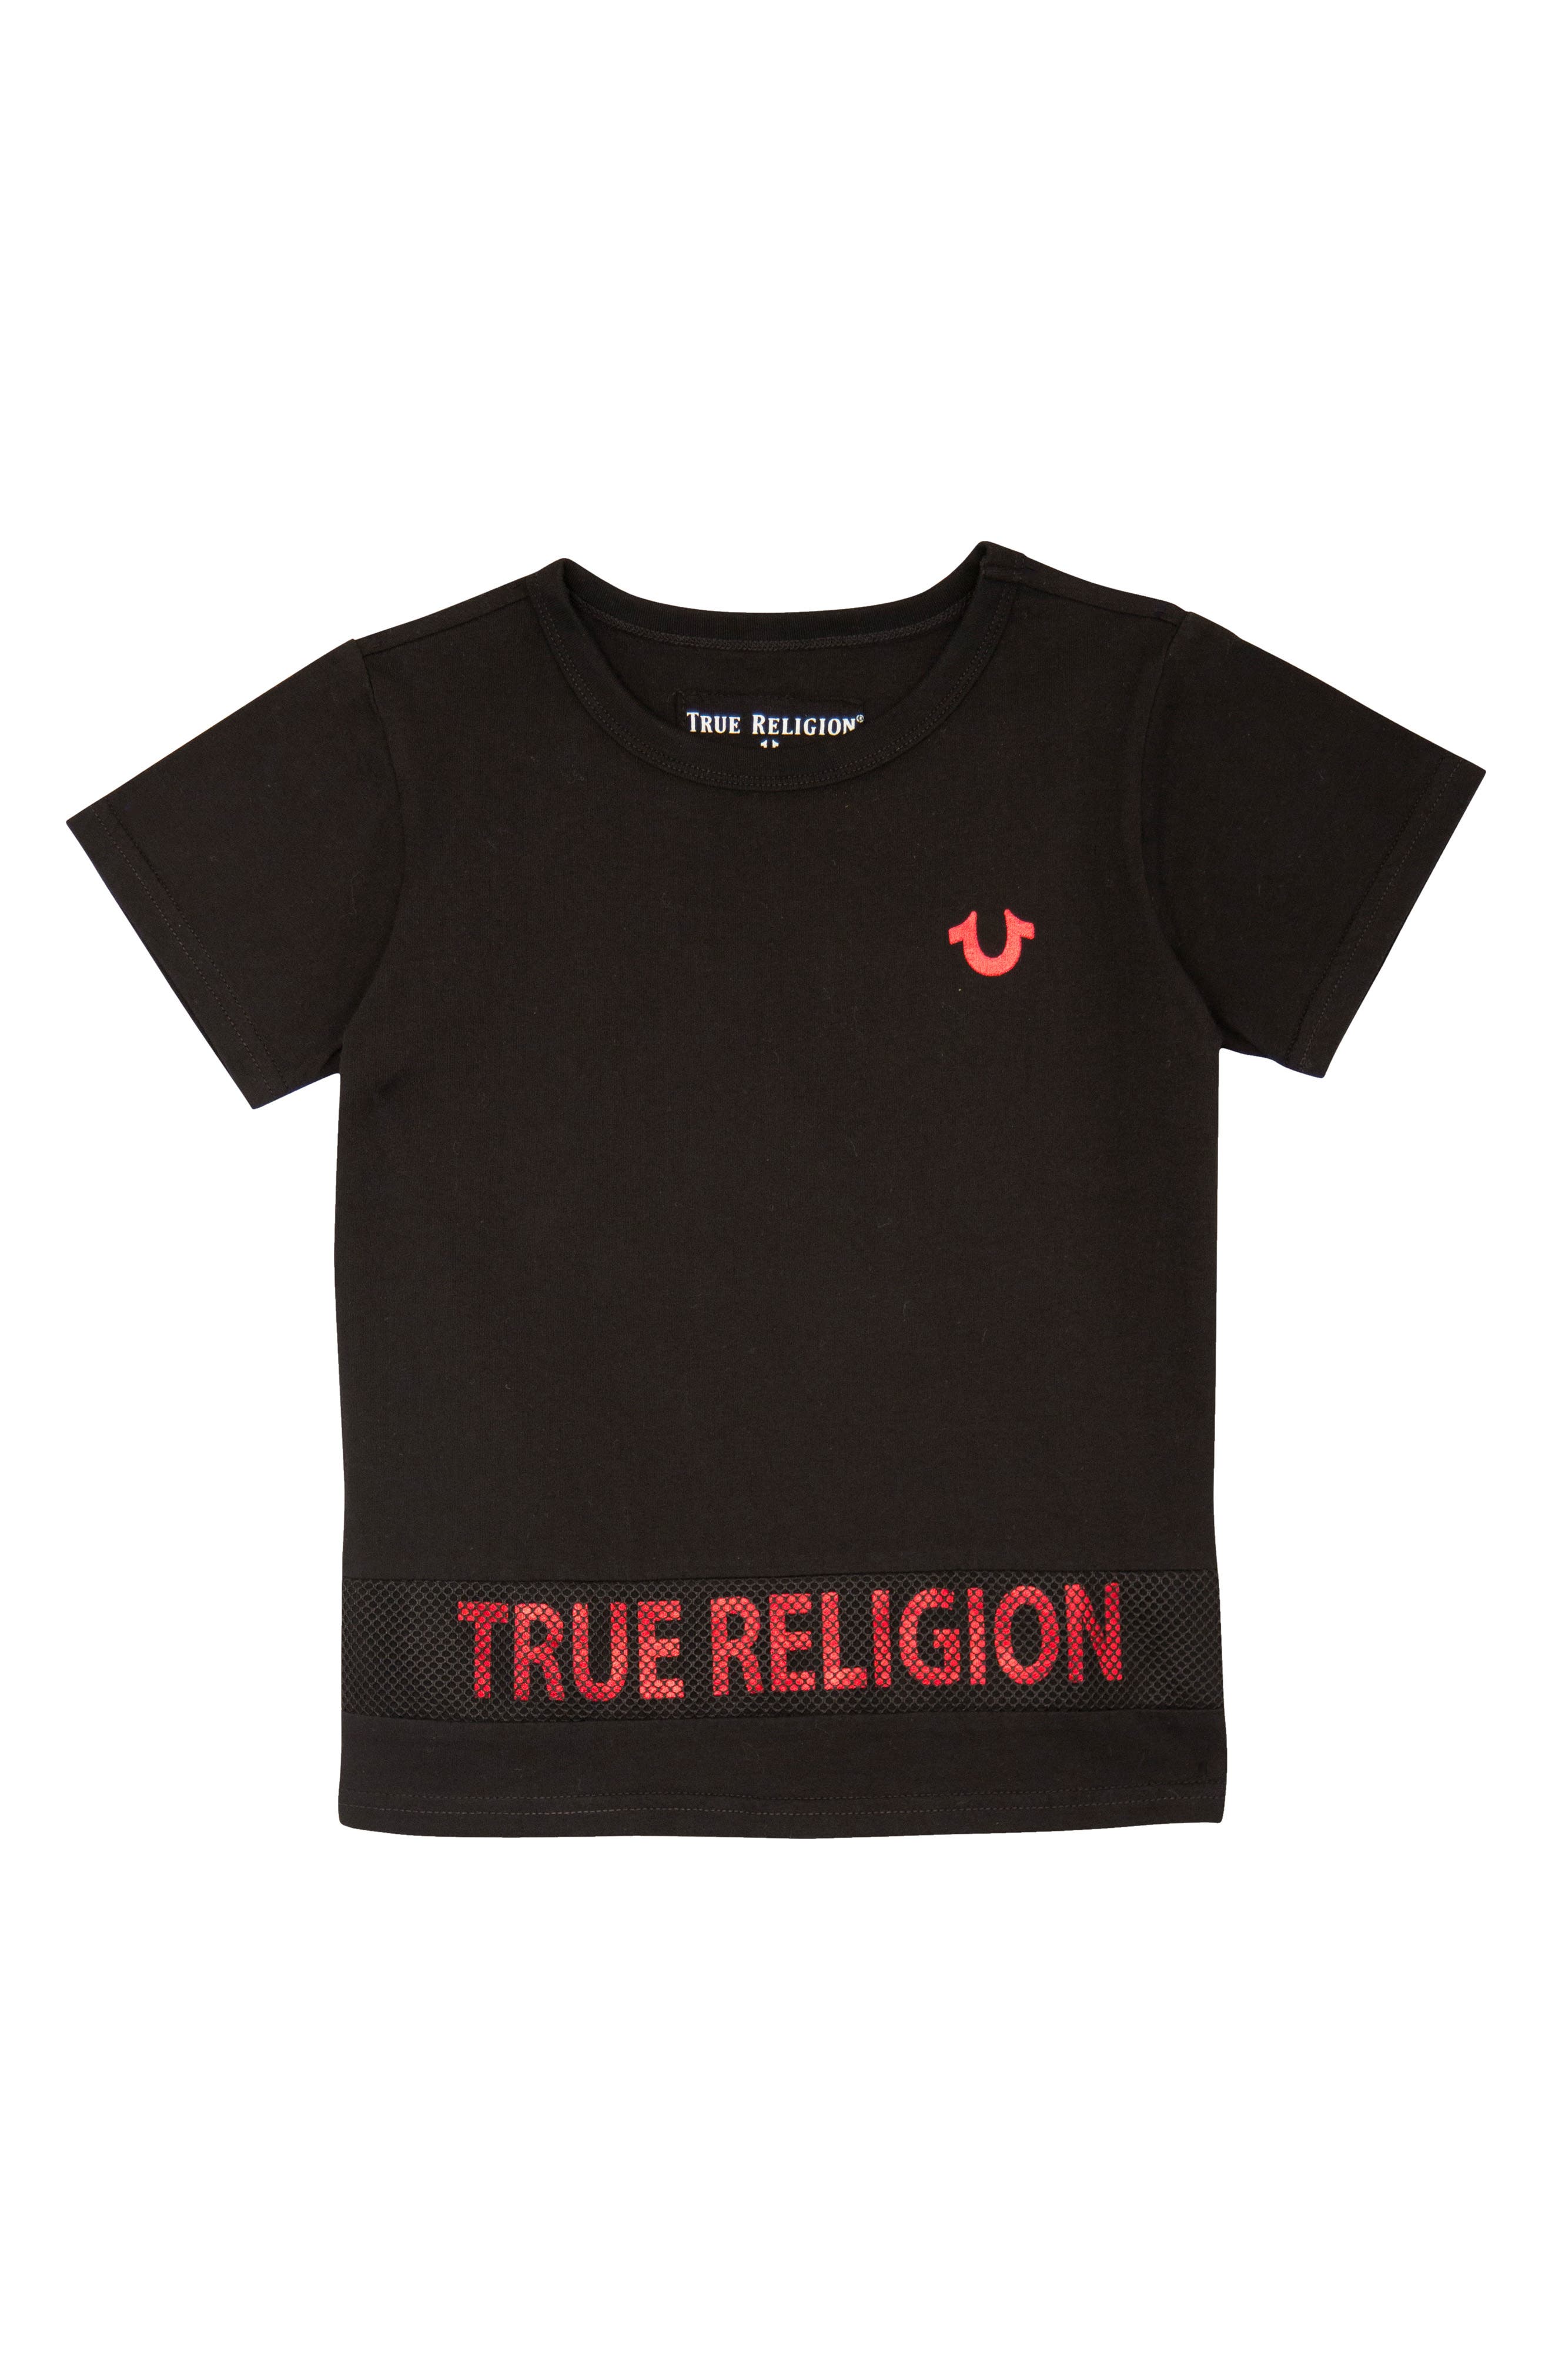 True Religion Jacket Size Chart